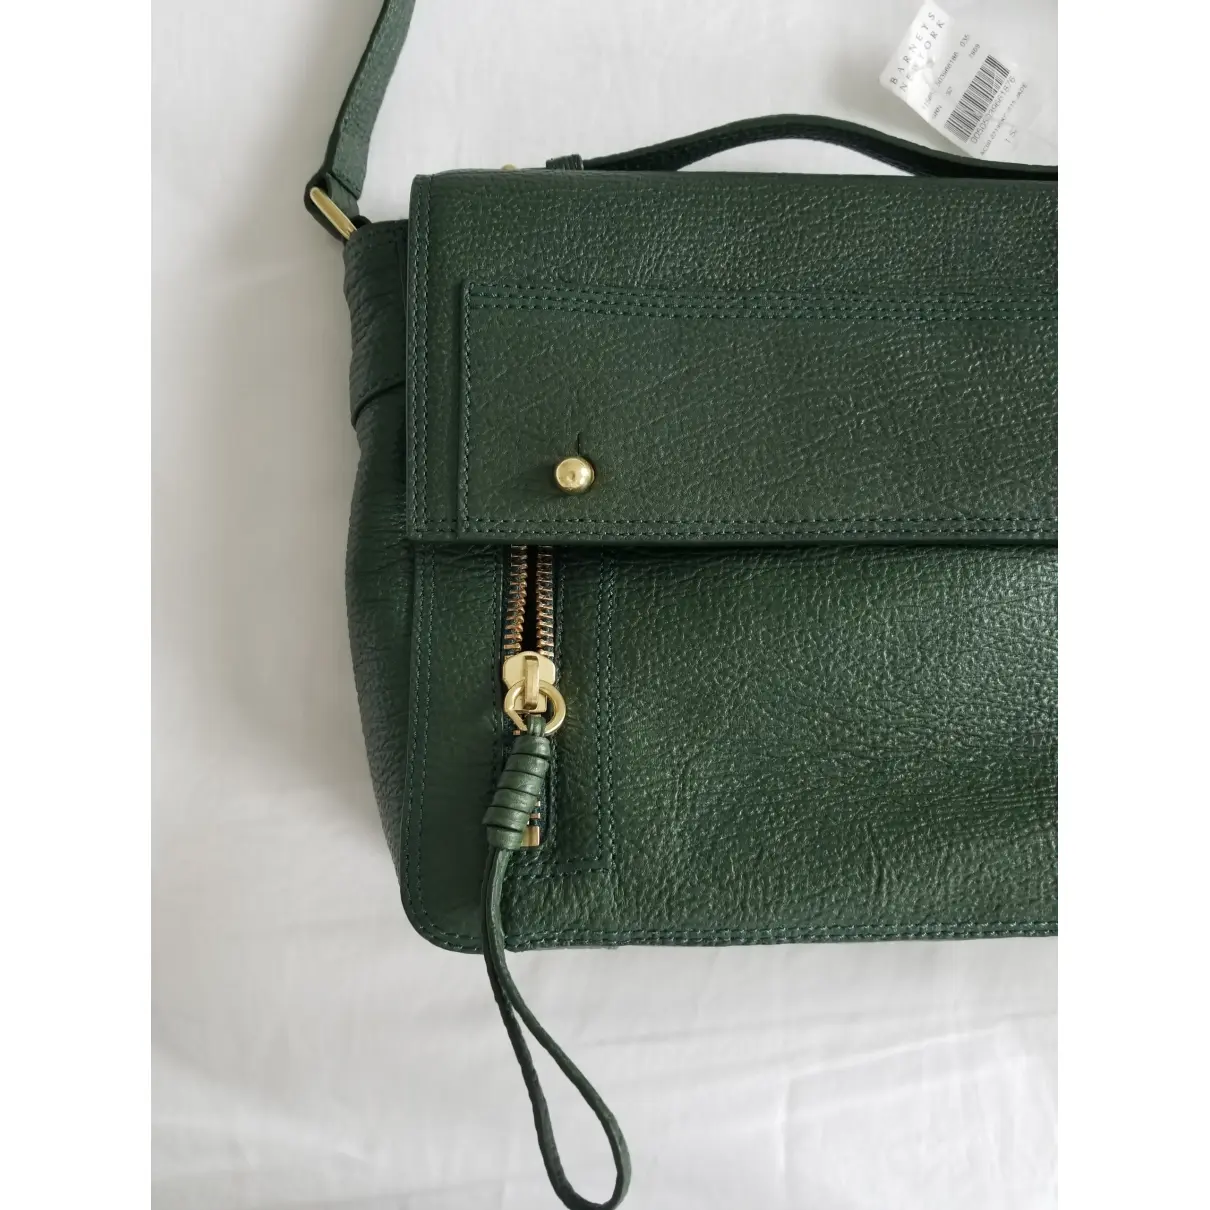 Buy 3.1 Phillip Lim Pashli leather crossbody bag online